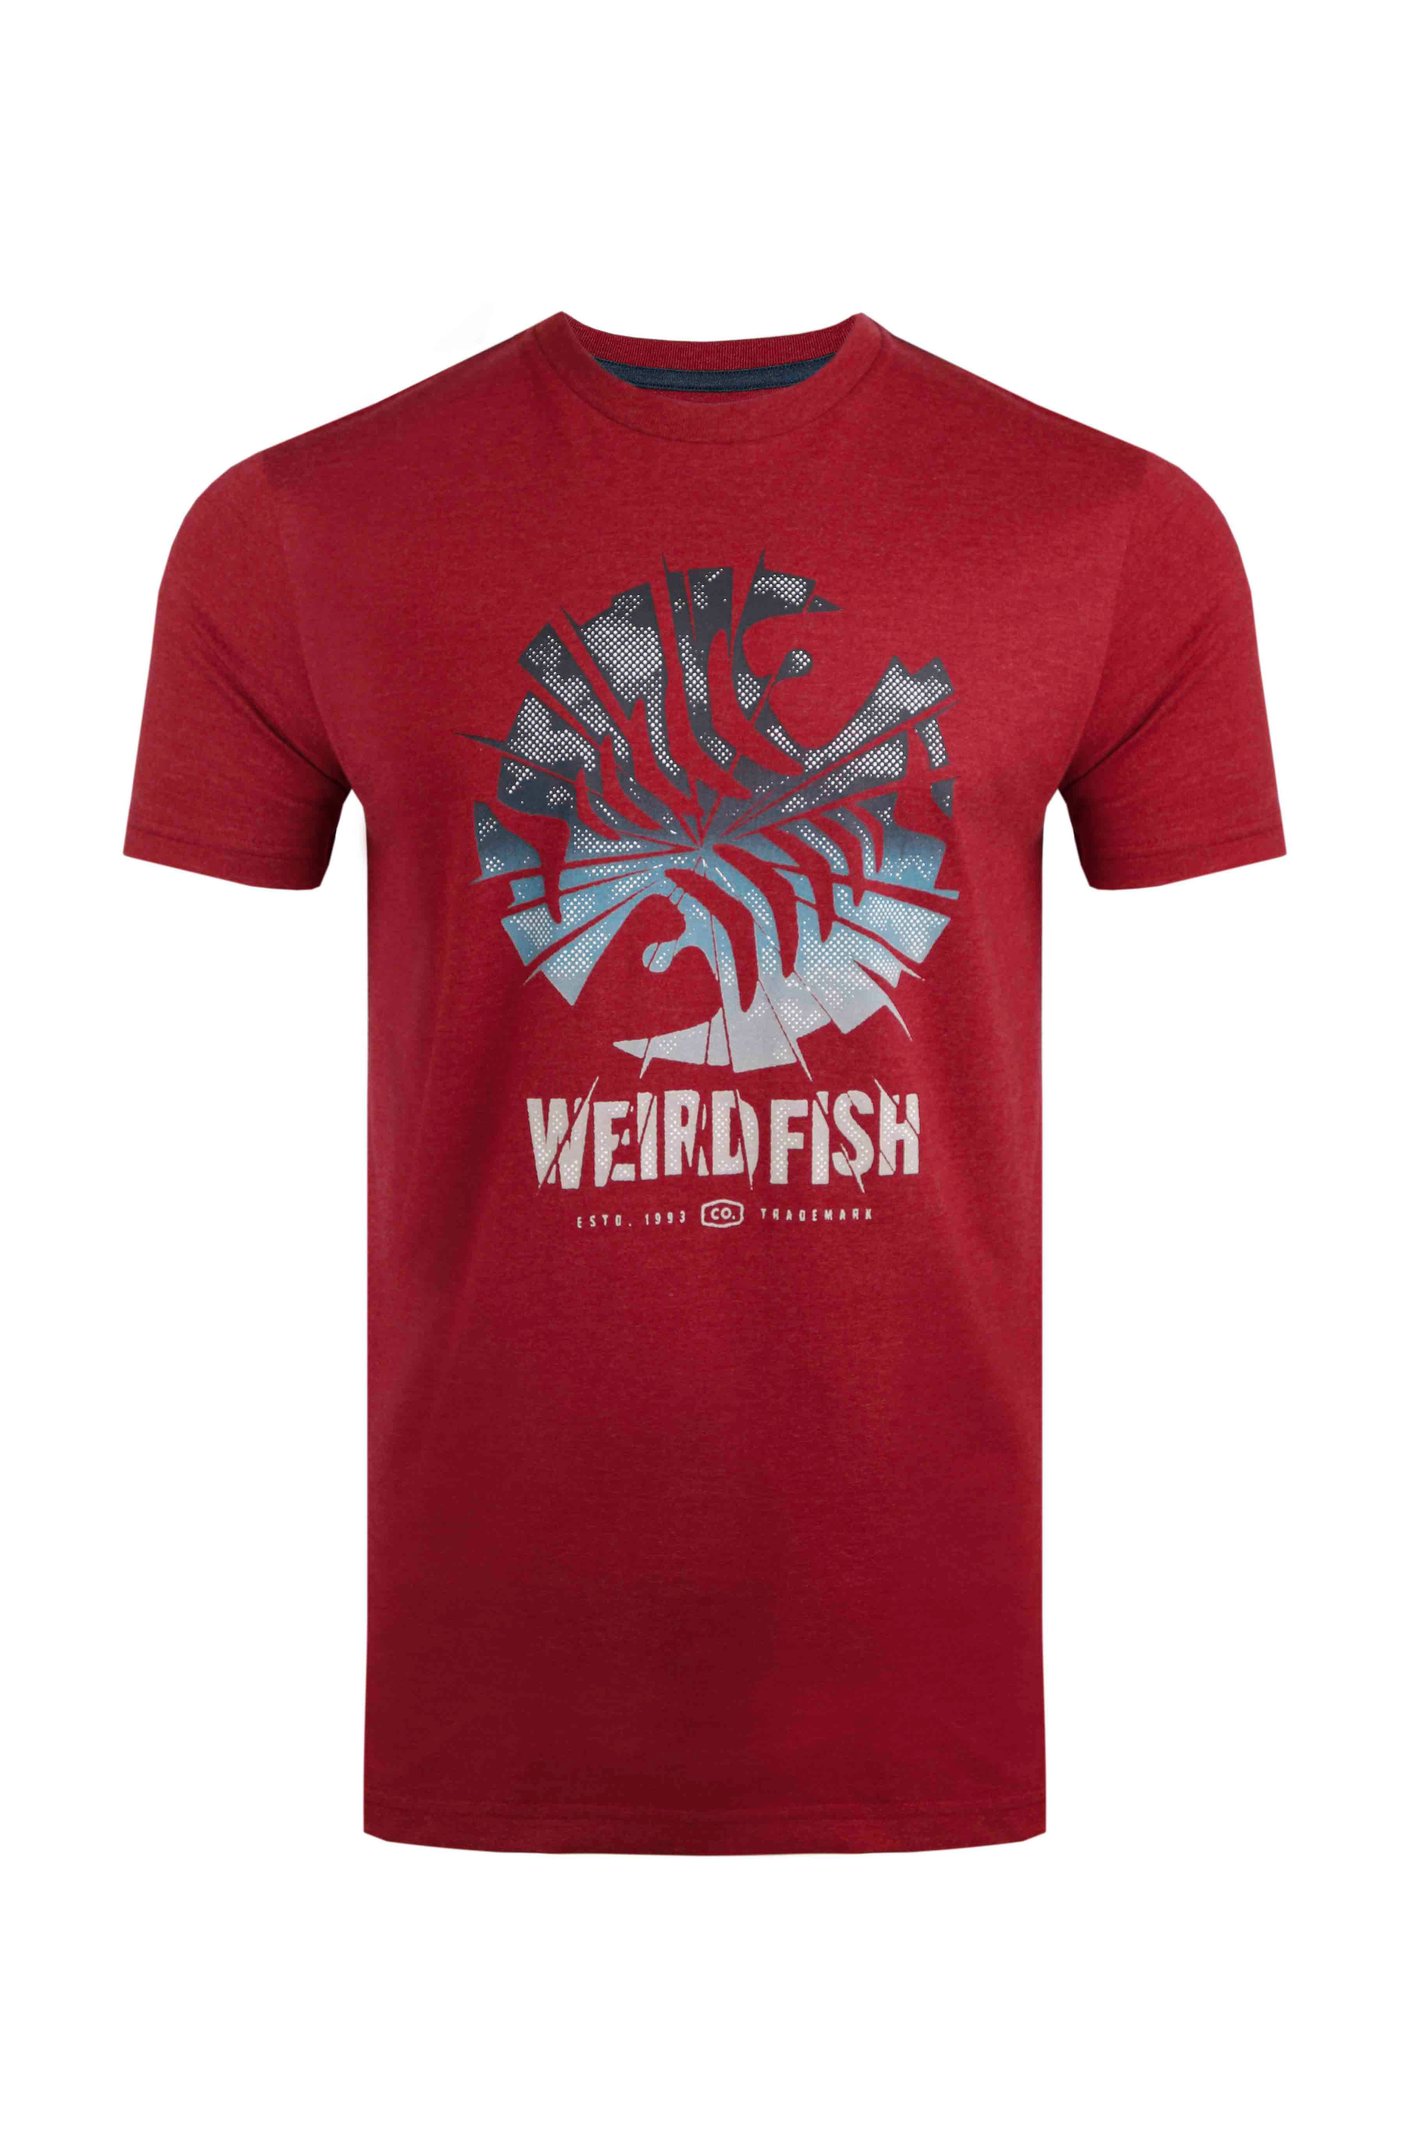 Weird Fish Shatter Graphic T-Shirt Foxberry Size XL